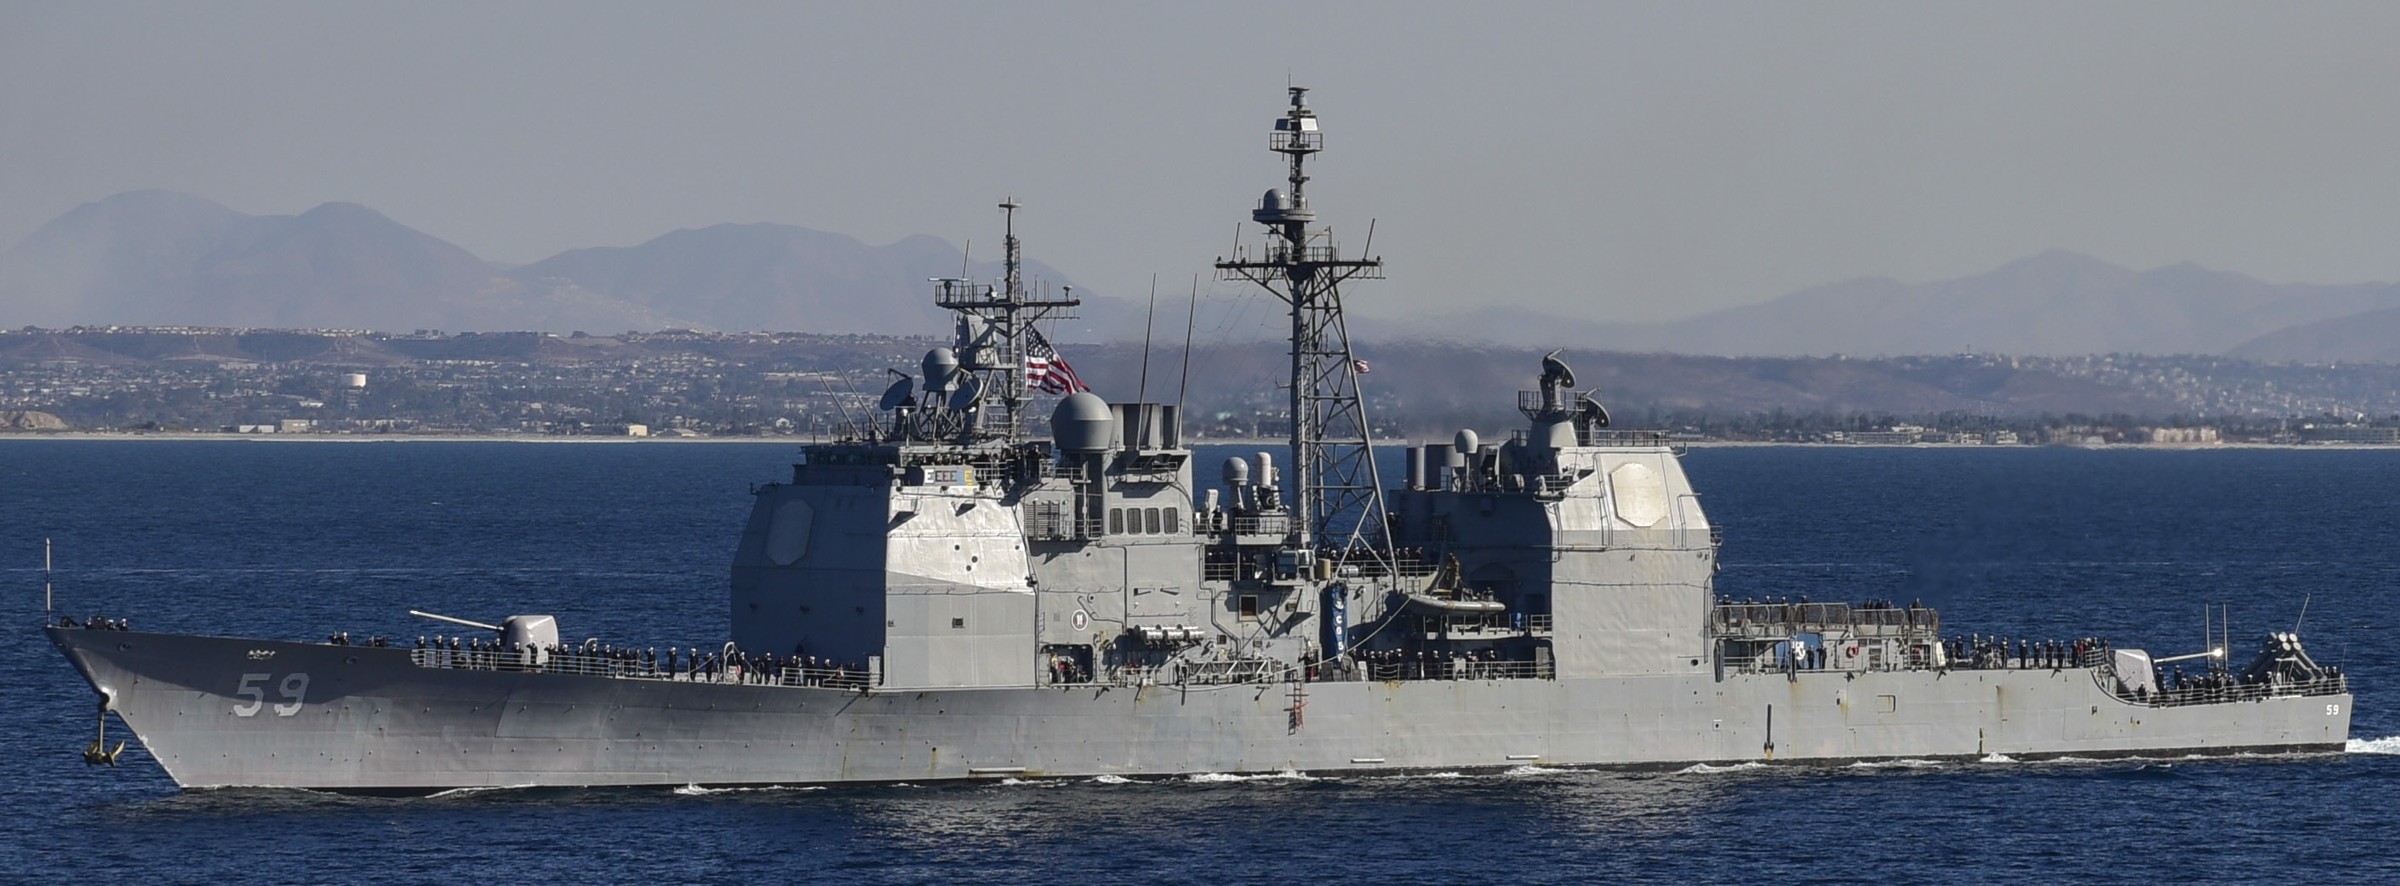 cg-59 uss princeton ticonderoga class guided missile cruiser aegis us navy 81